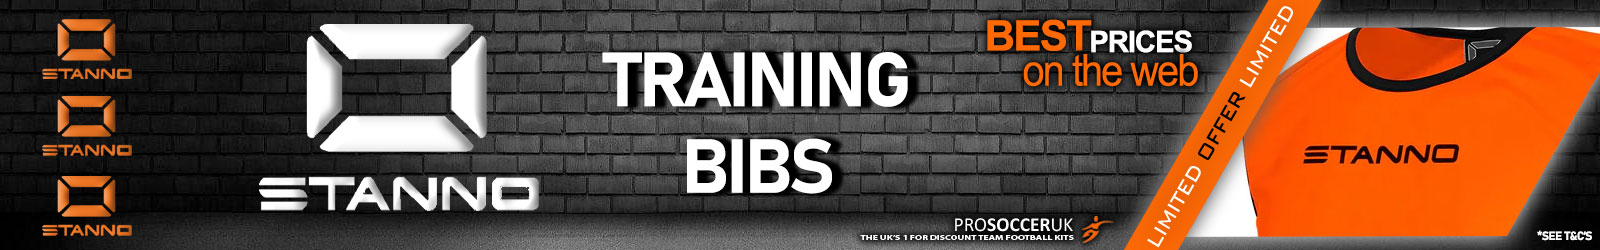 Stanno Training Bibs